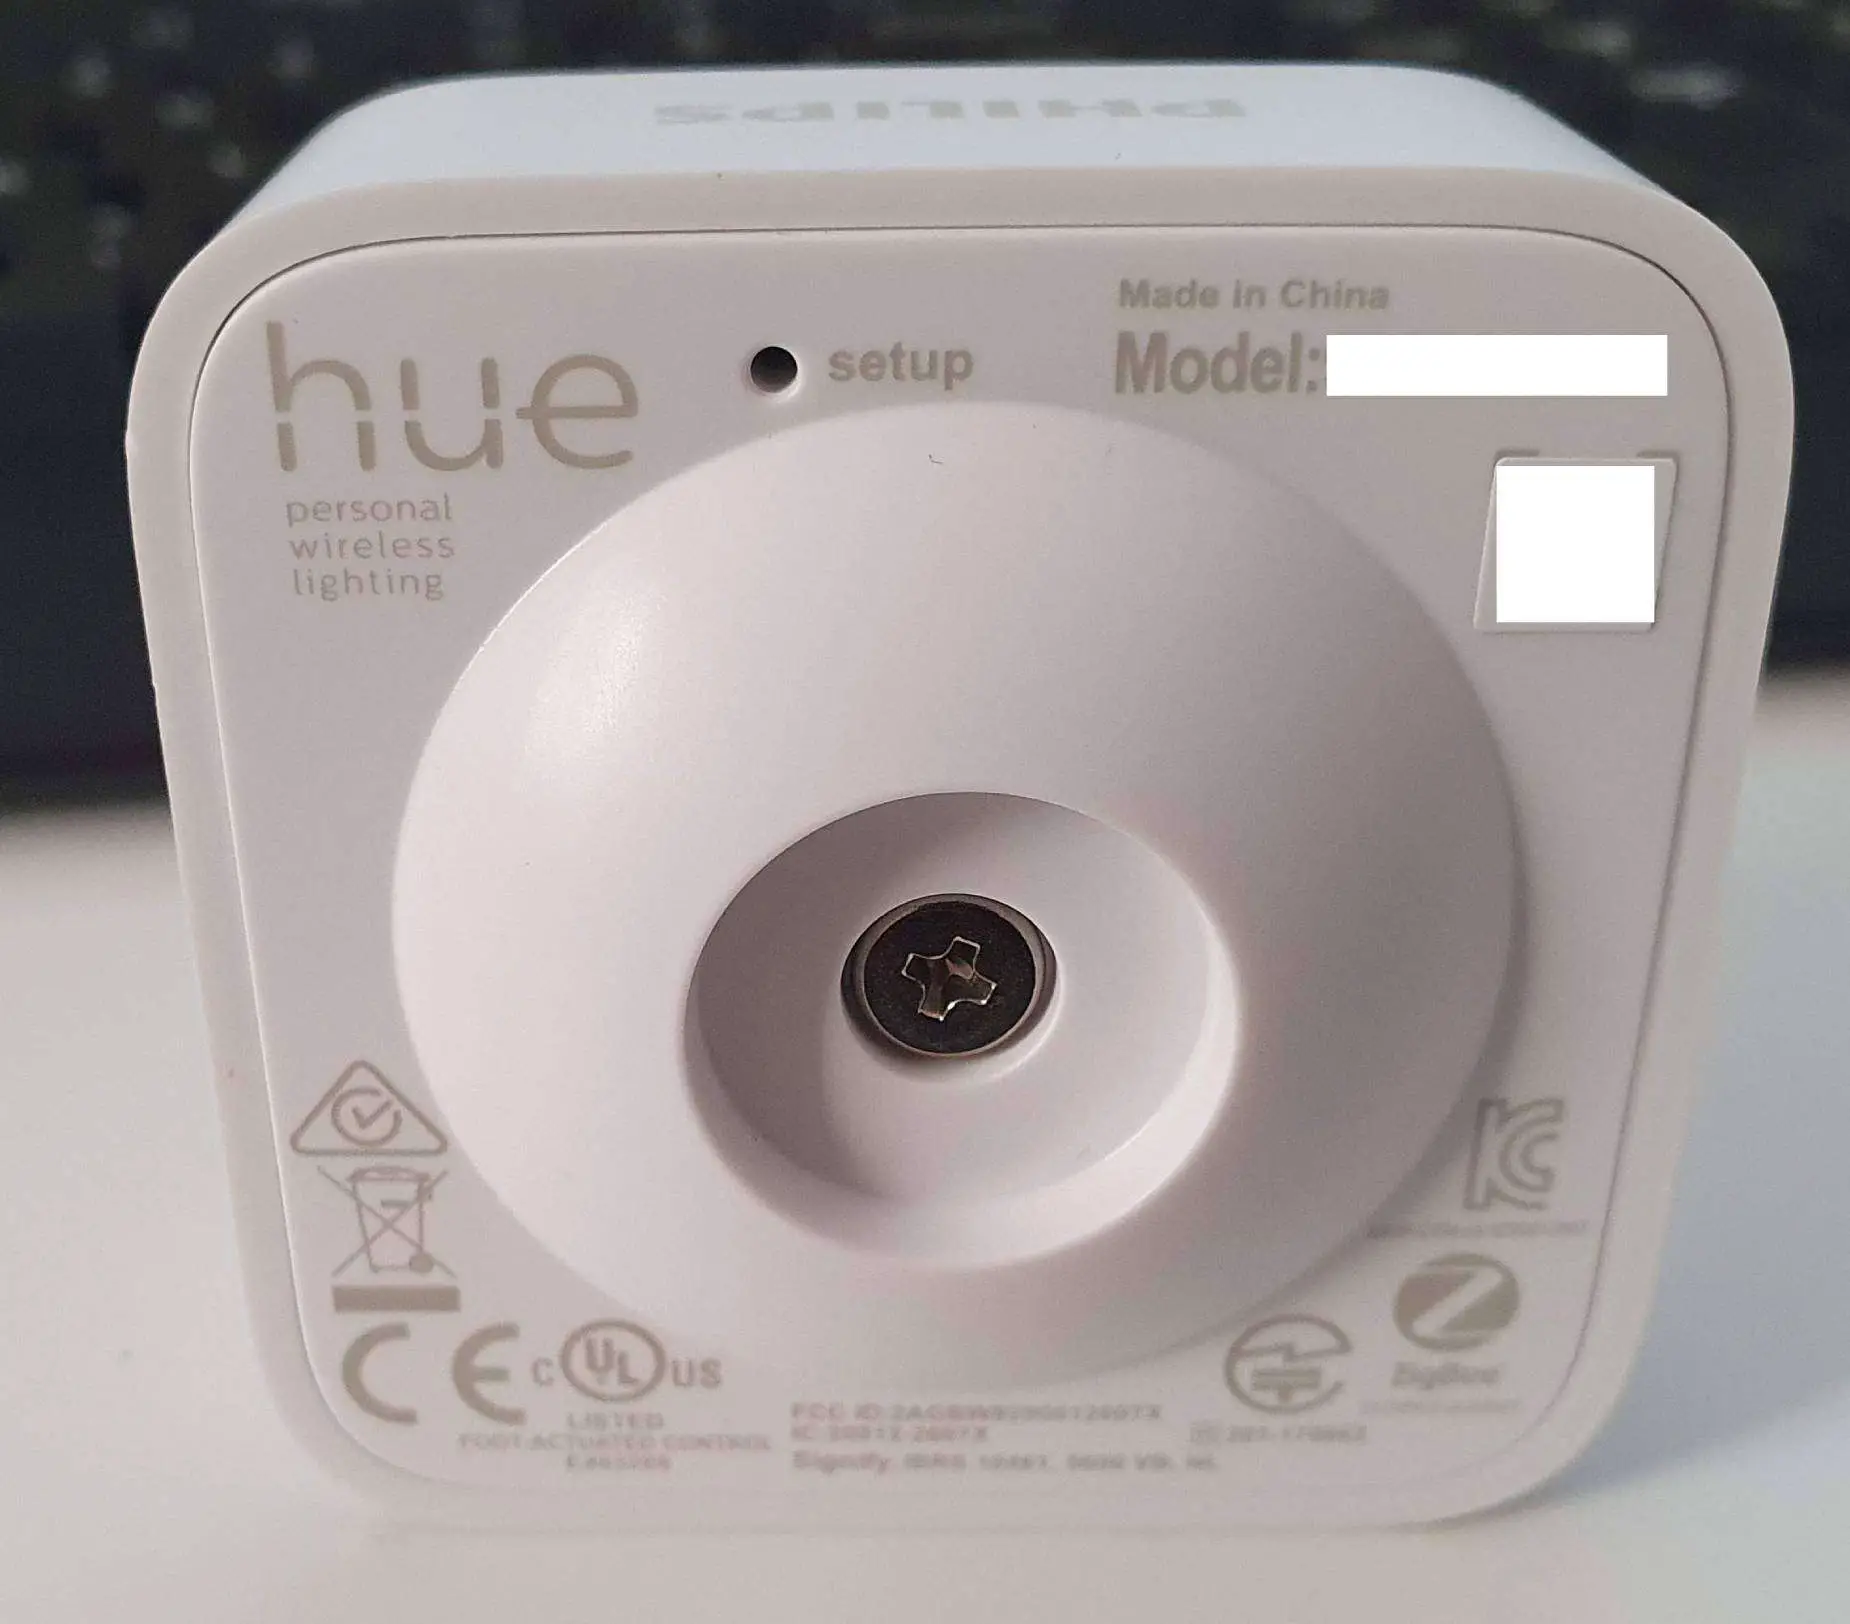 What About Hue's Motion Sensor Batteries - Smart Winner